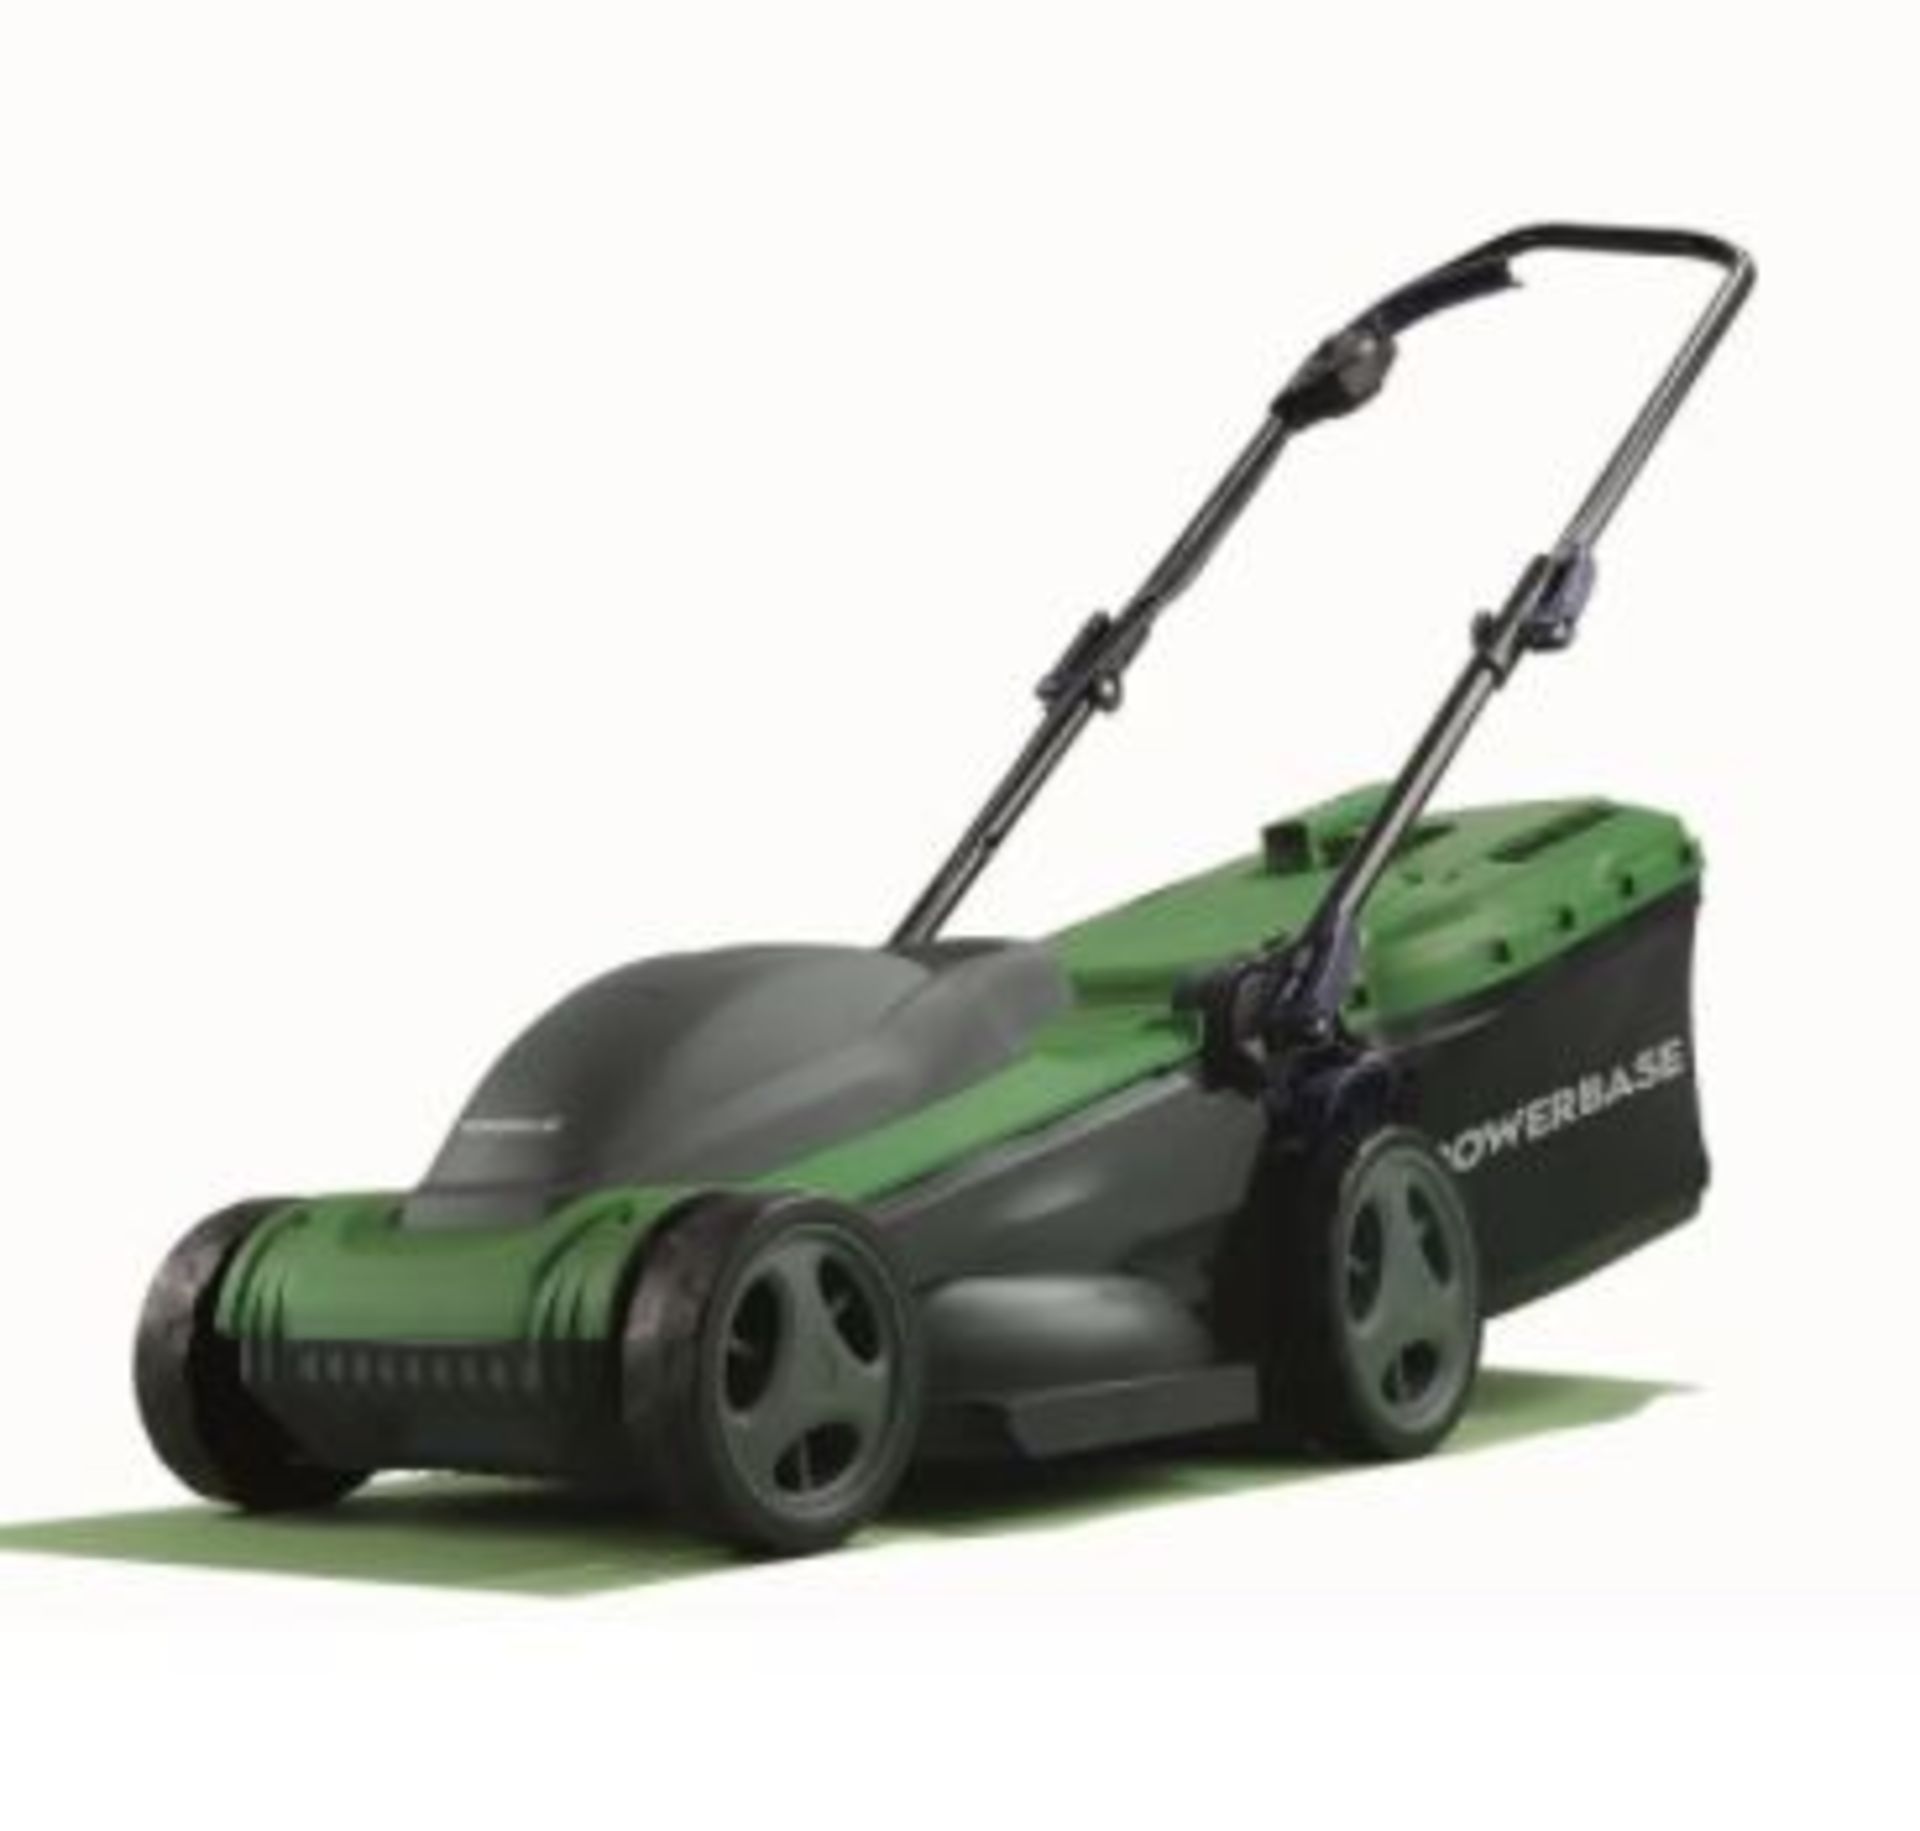 (R4E) 3 Items. 1x Powerbase 34cm 1400W Rotary Lawn Mower. 1x Qualcast 1400W Rotary Lawn Mower. 1x P